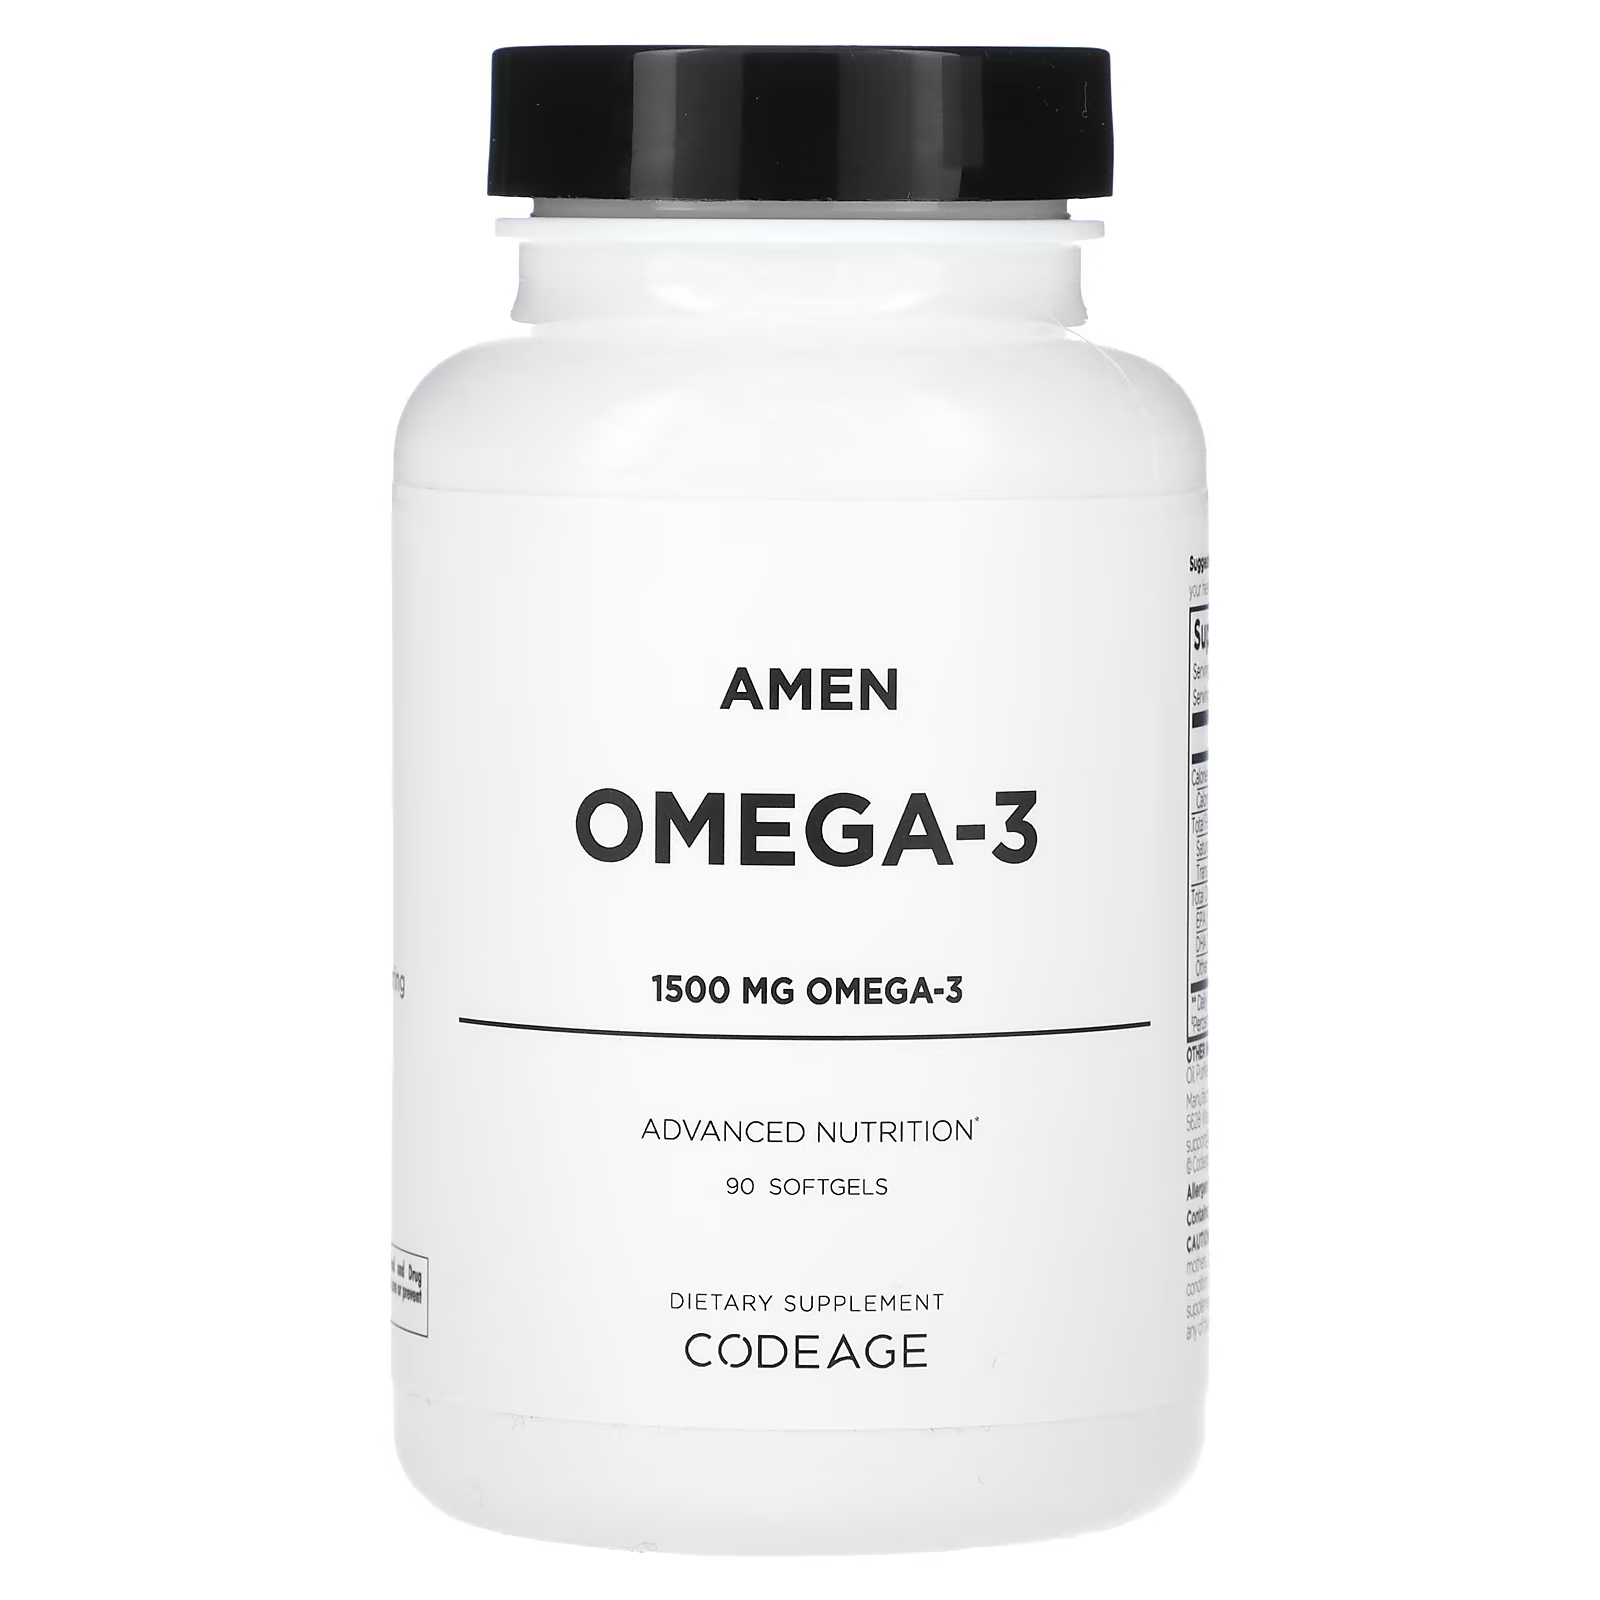 Omega-3 Codeage Amen 1500 мг, 90 мягких таблеток codeage amen омега 3 1500 мг 90 мягких таблеток